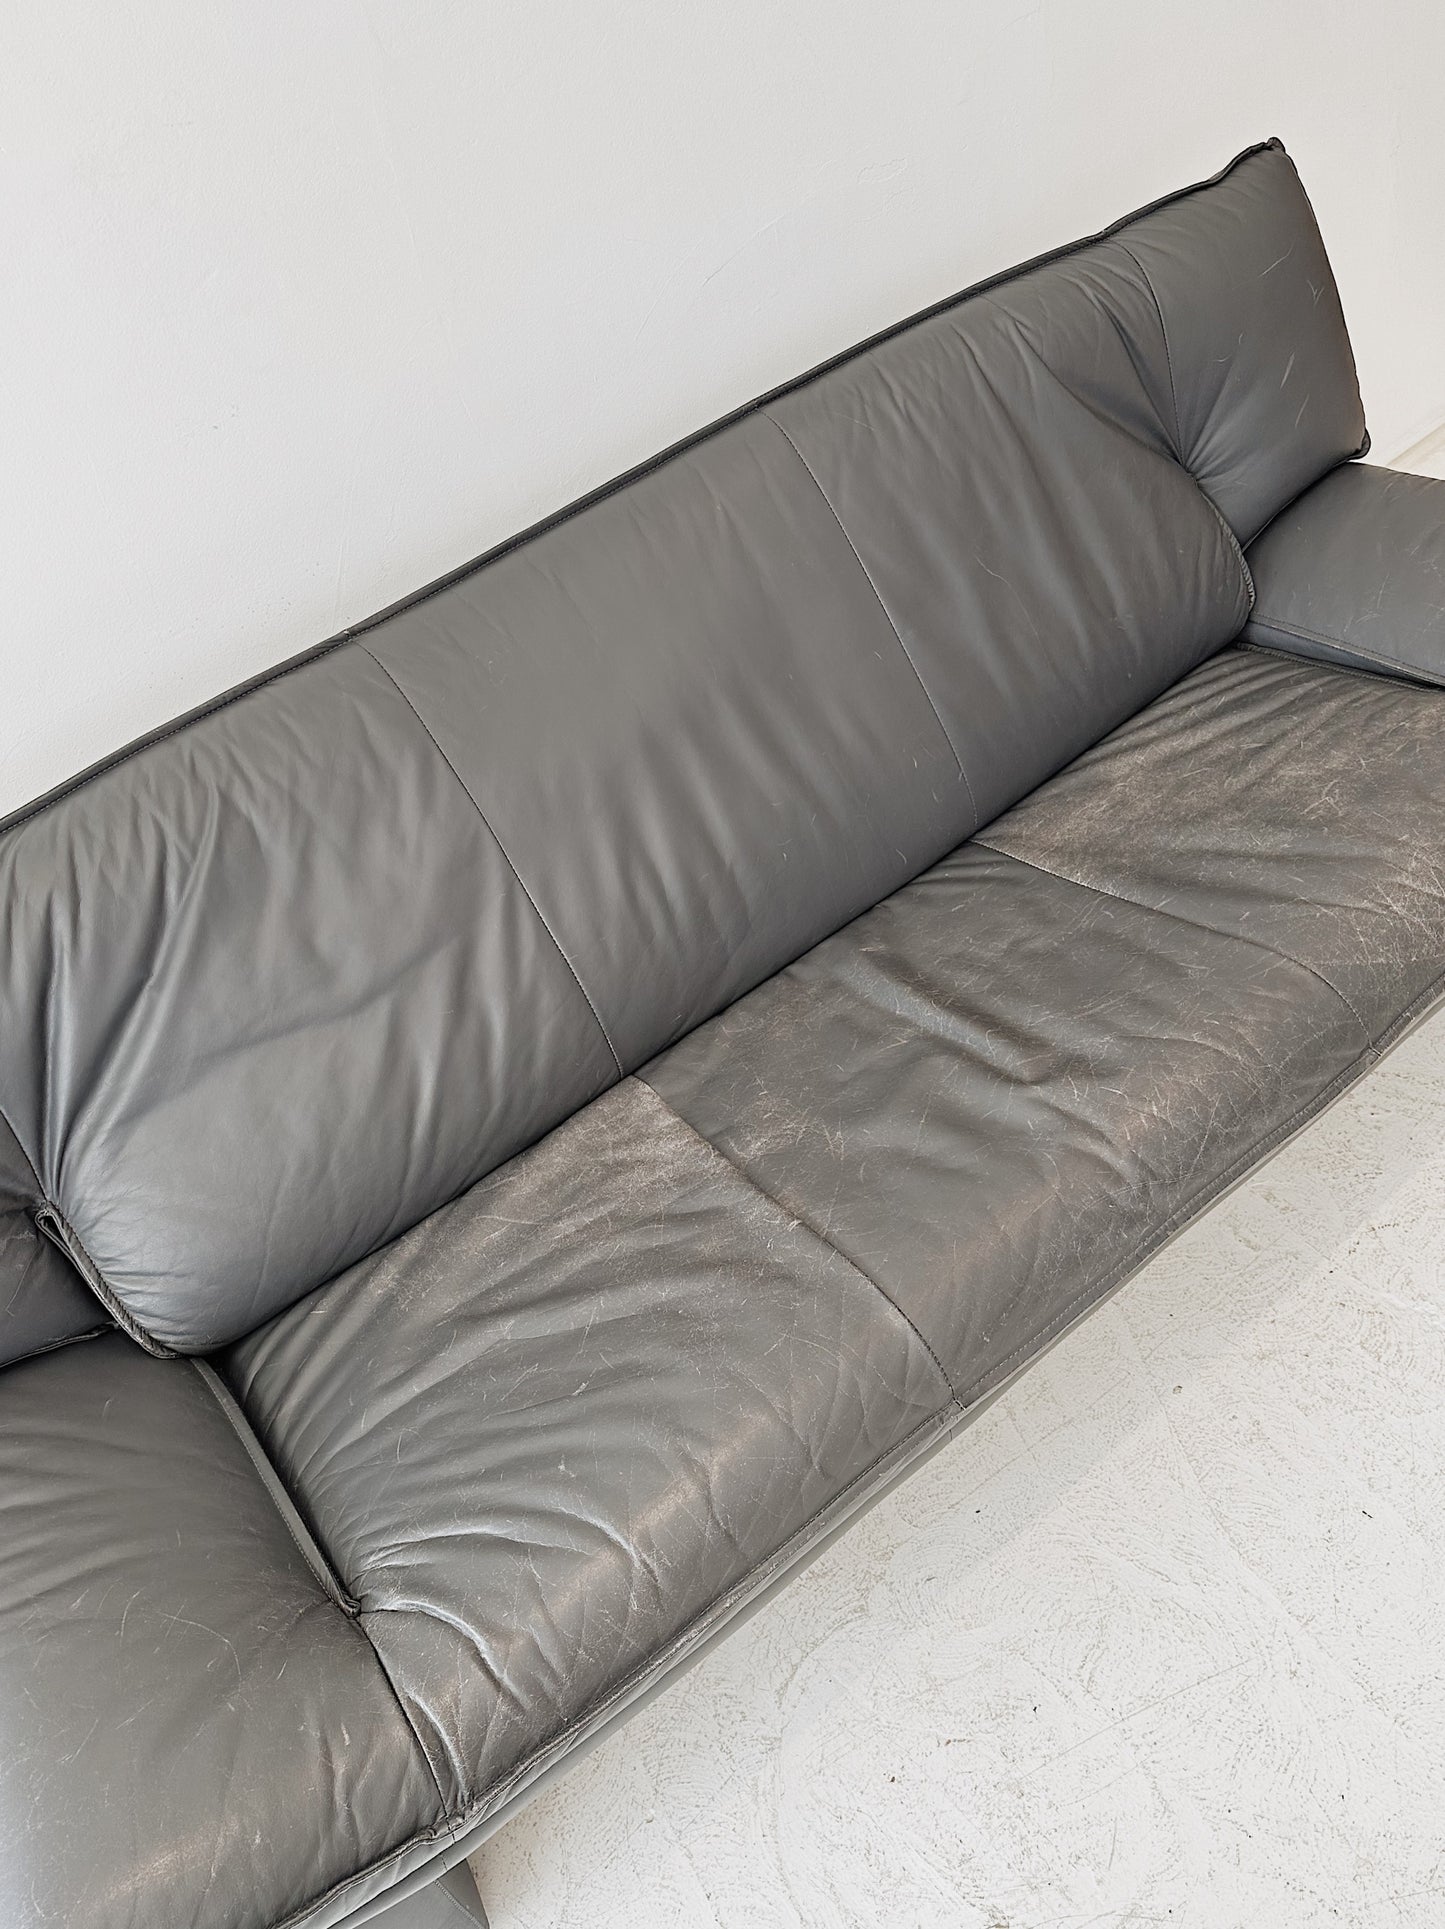 Nicoletti Salotti Postmodern Italian Leather Sofa Set